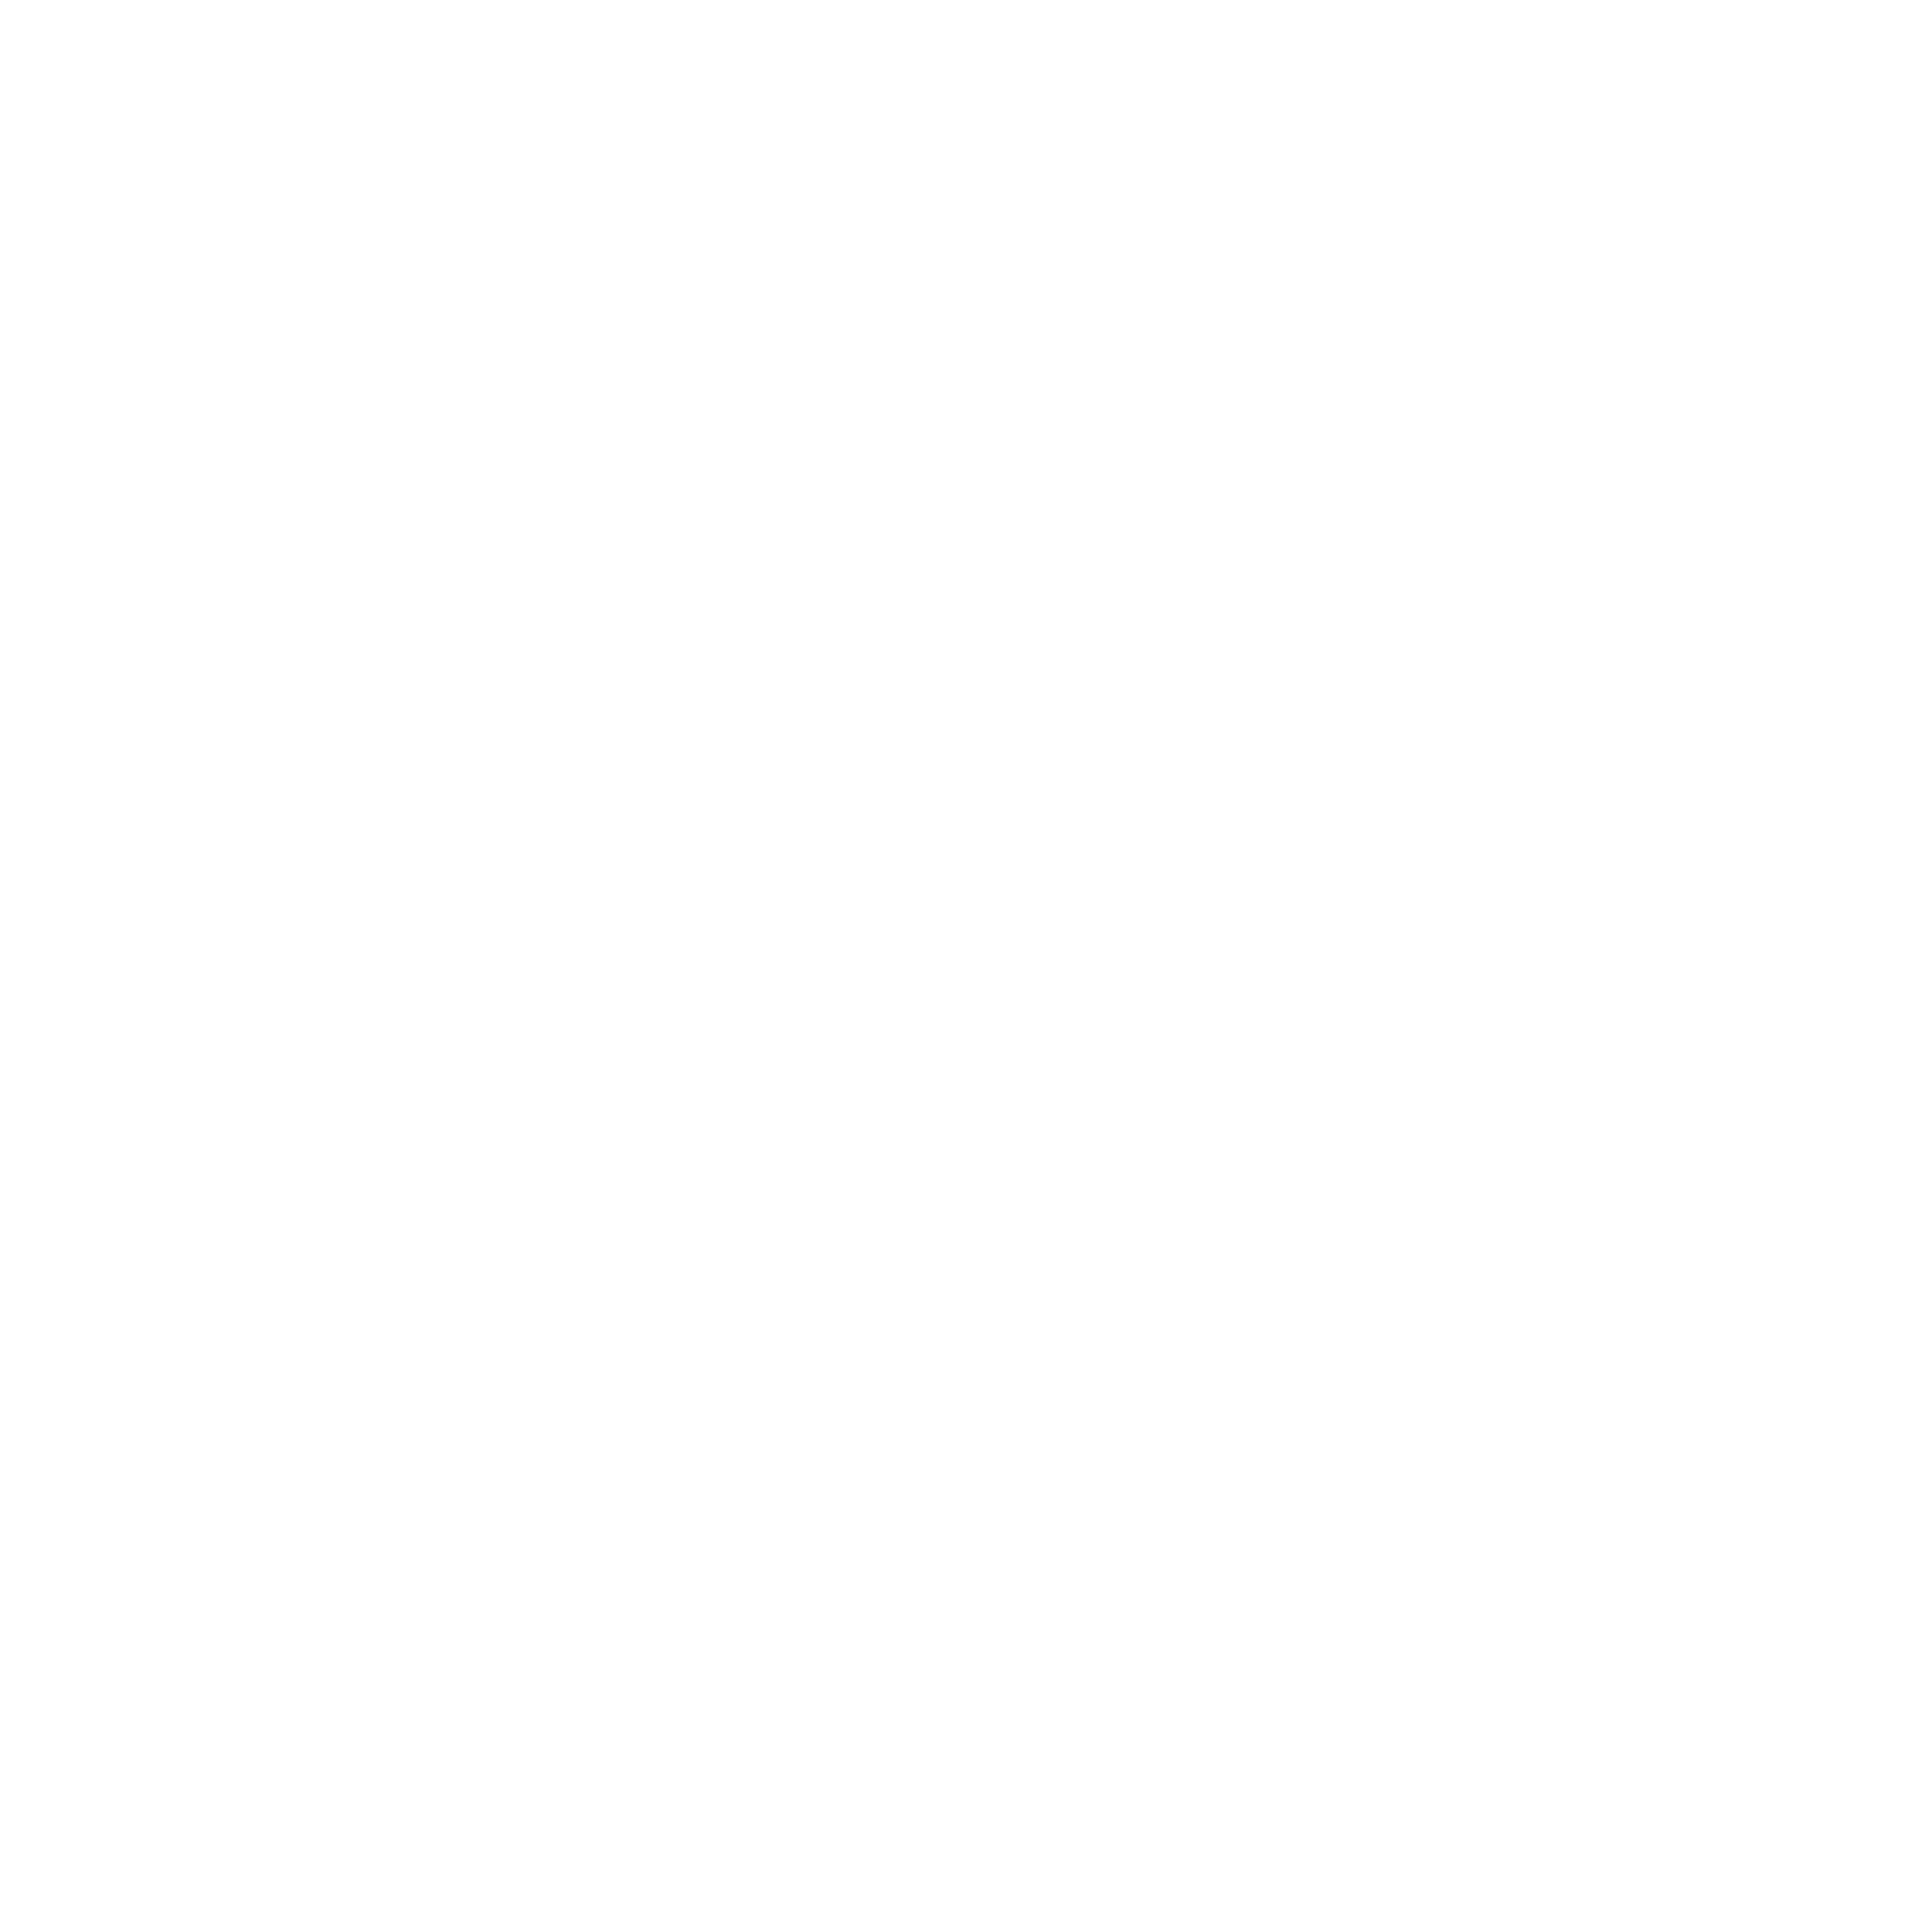 Braun Pakistan